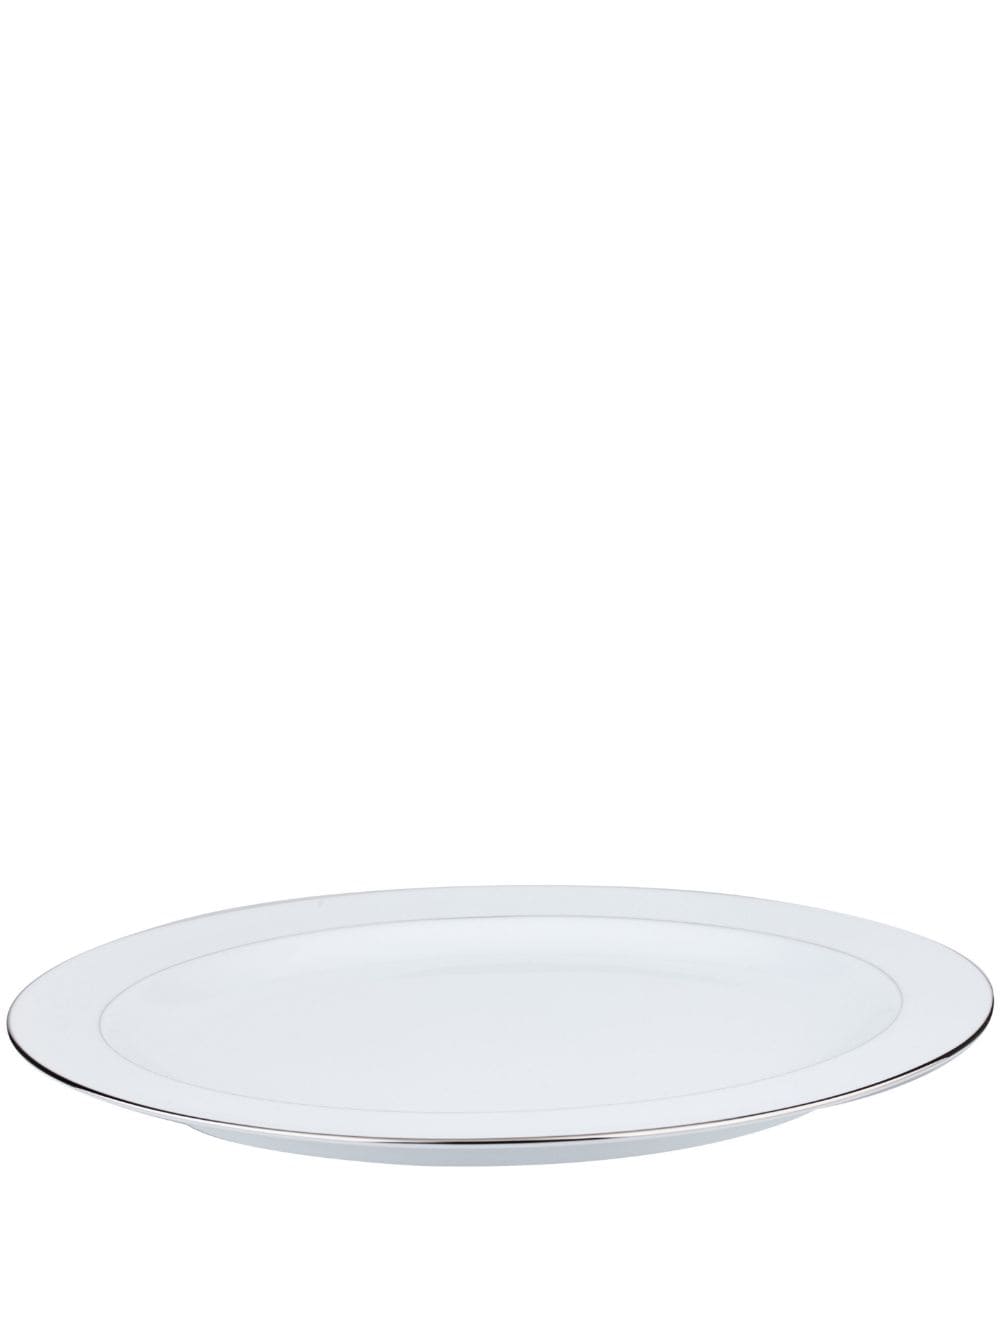 Christofle Albi oval plate - White von Christofle